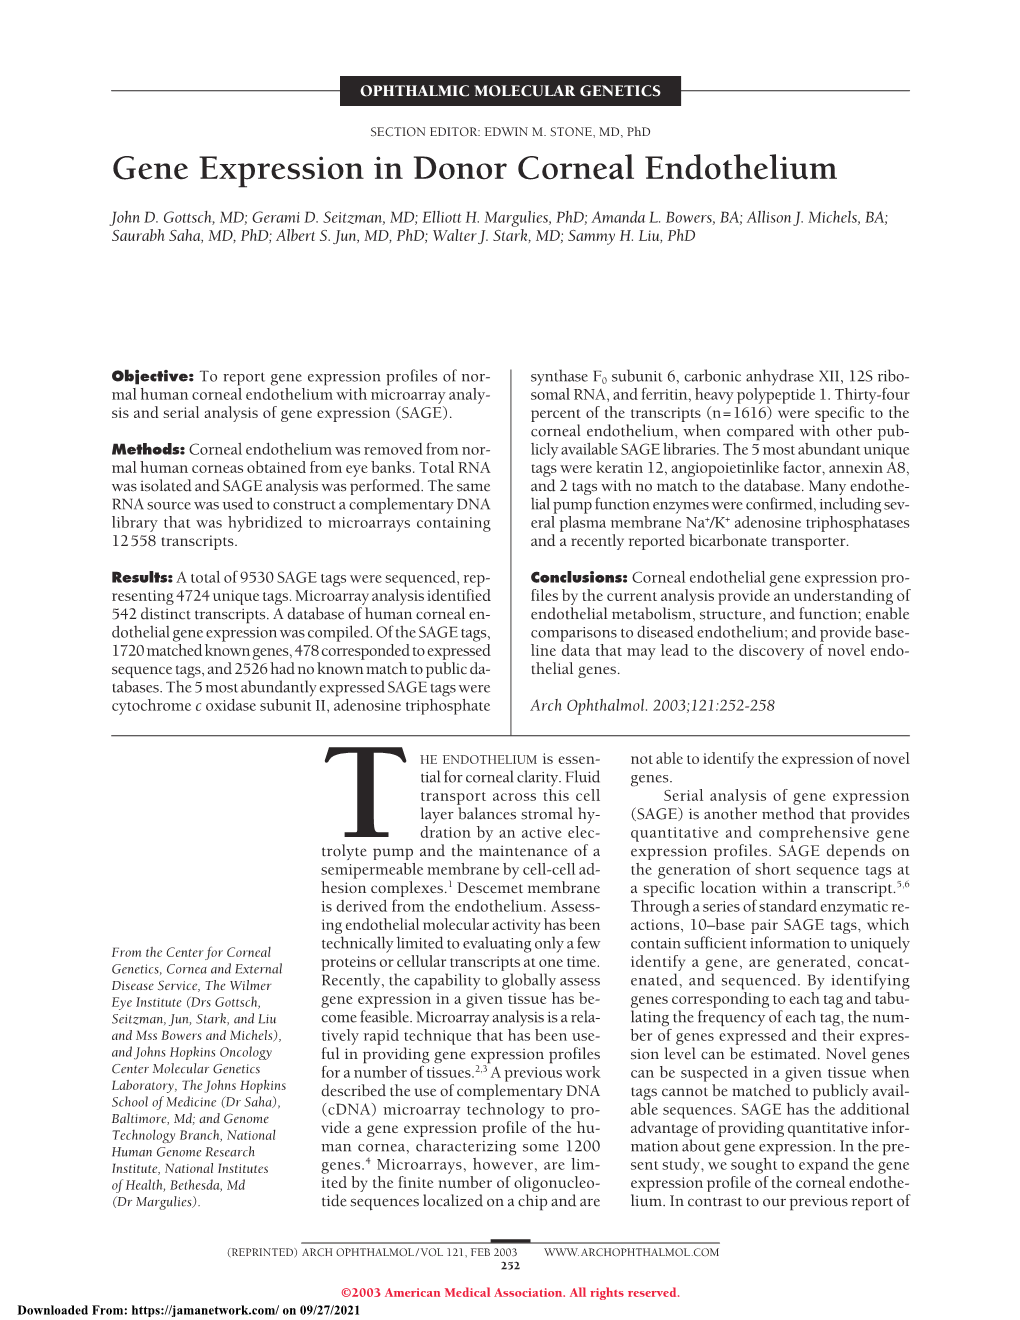 Gene Expression in Donor Corneal Endothelium